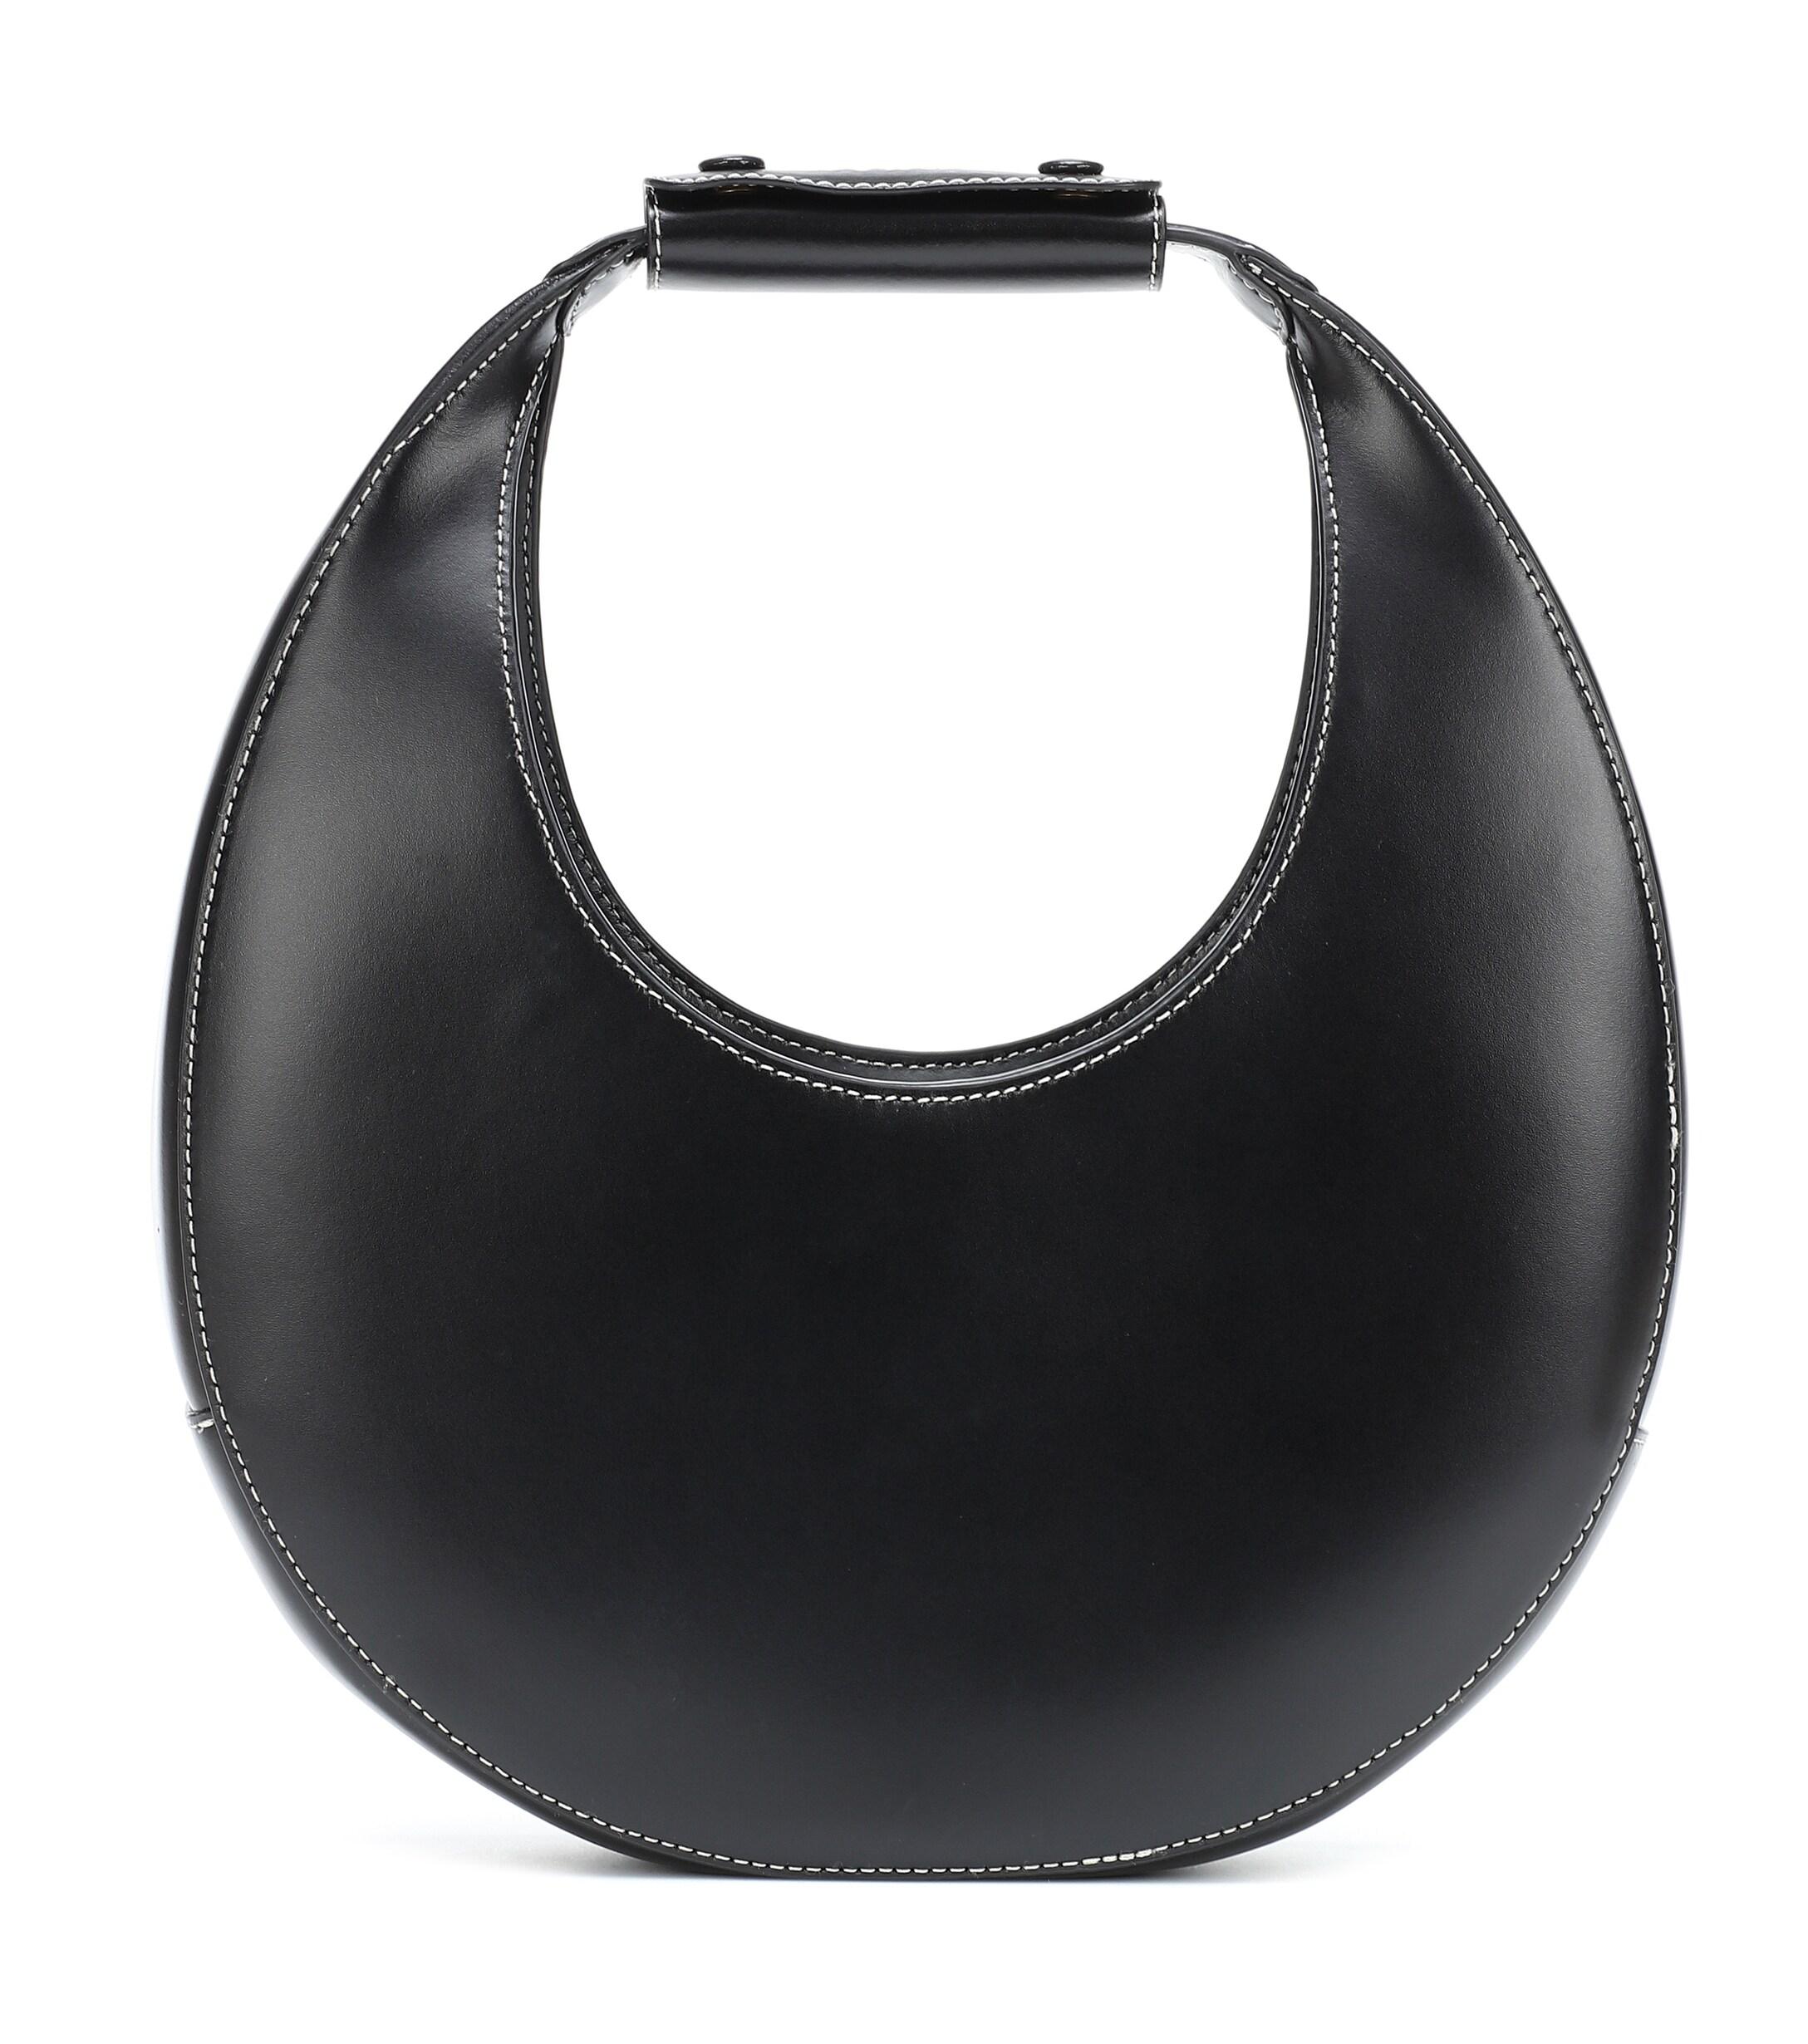 STAUD Mini Moon Leather Shoulder Bag in Black - Save 74% | Lyst